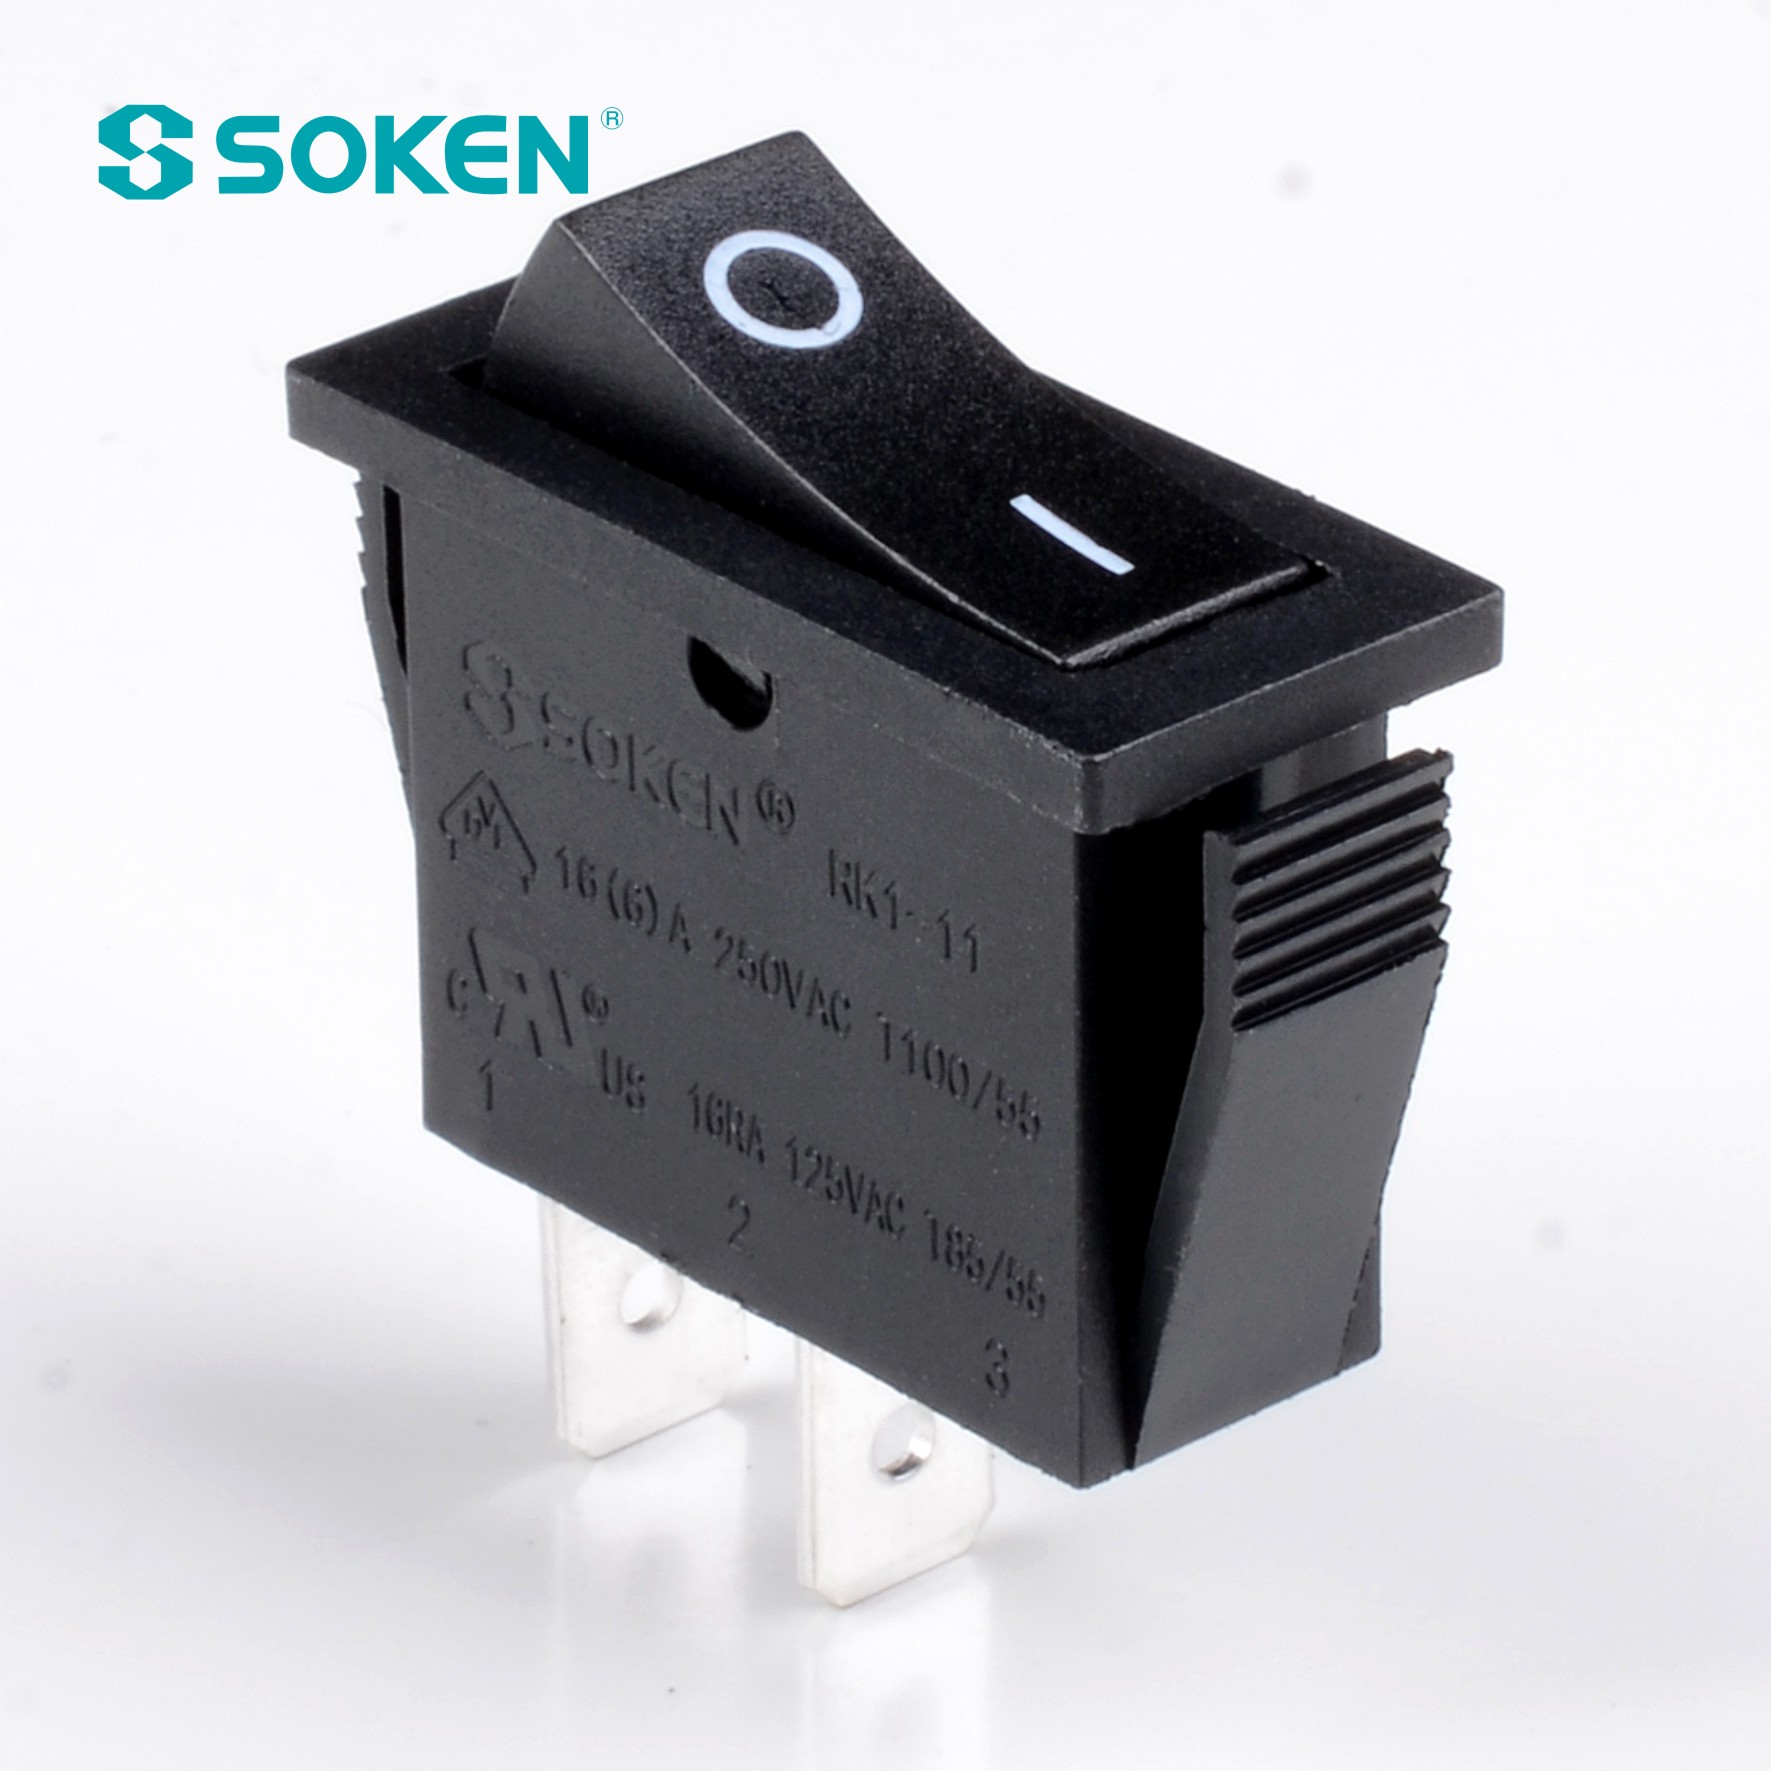 Soken RoHS UL Single Pole Rocker Switch T85 / Defond Switches